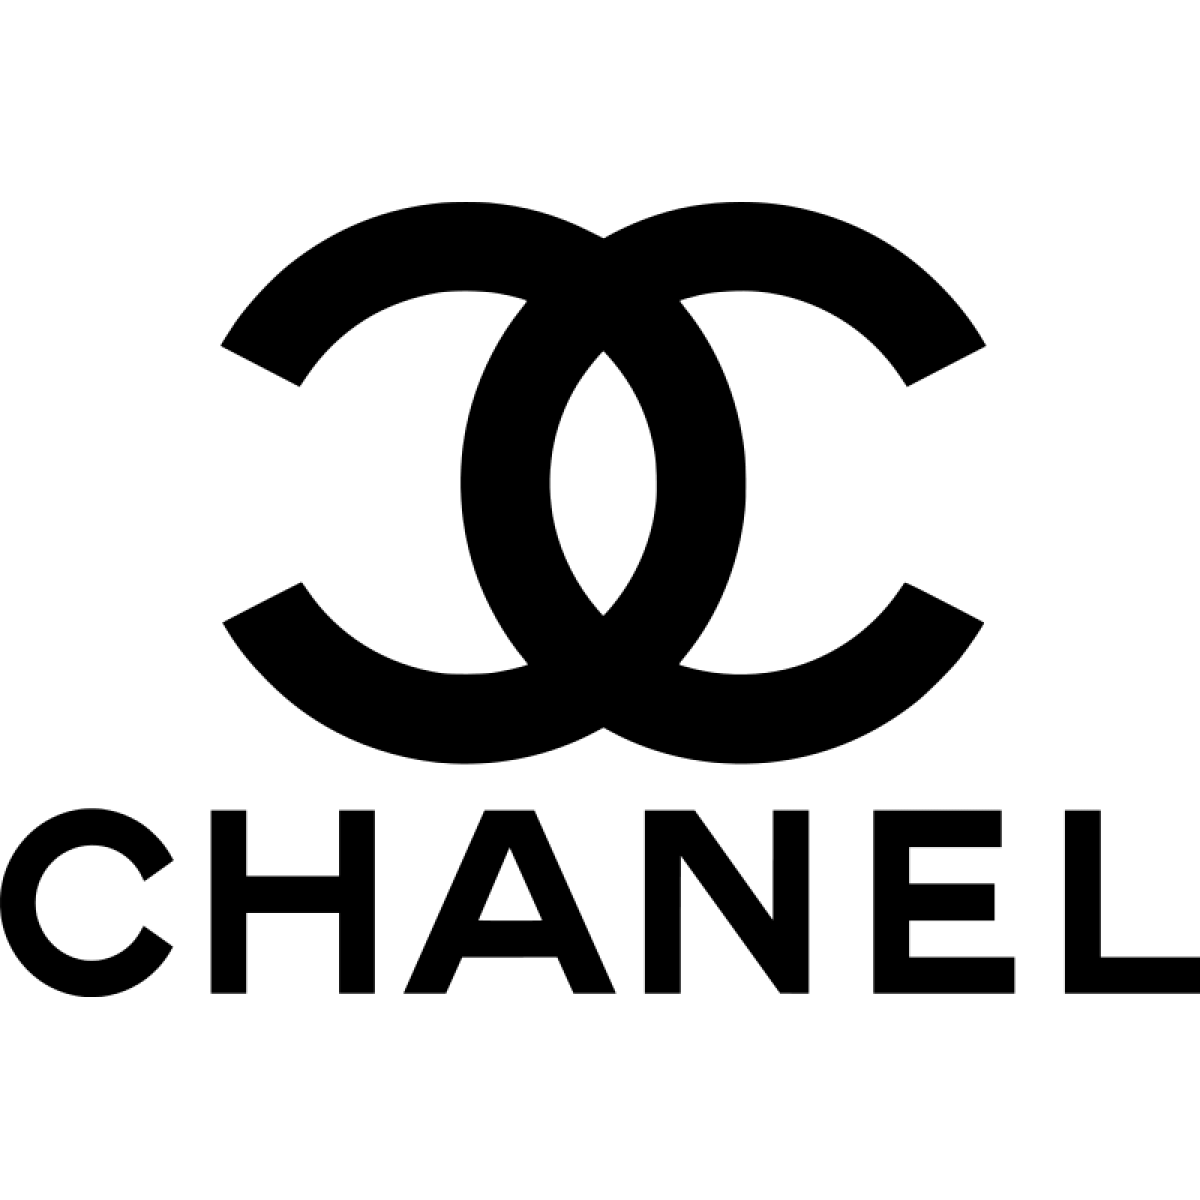 Google Channel Logo - Channel logo png 2 » PNG Image